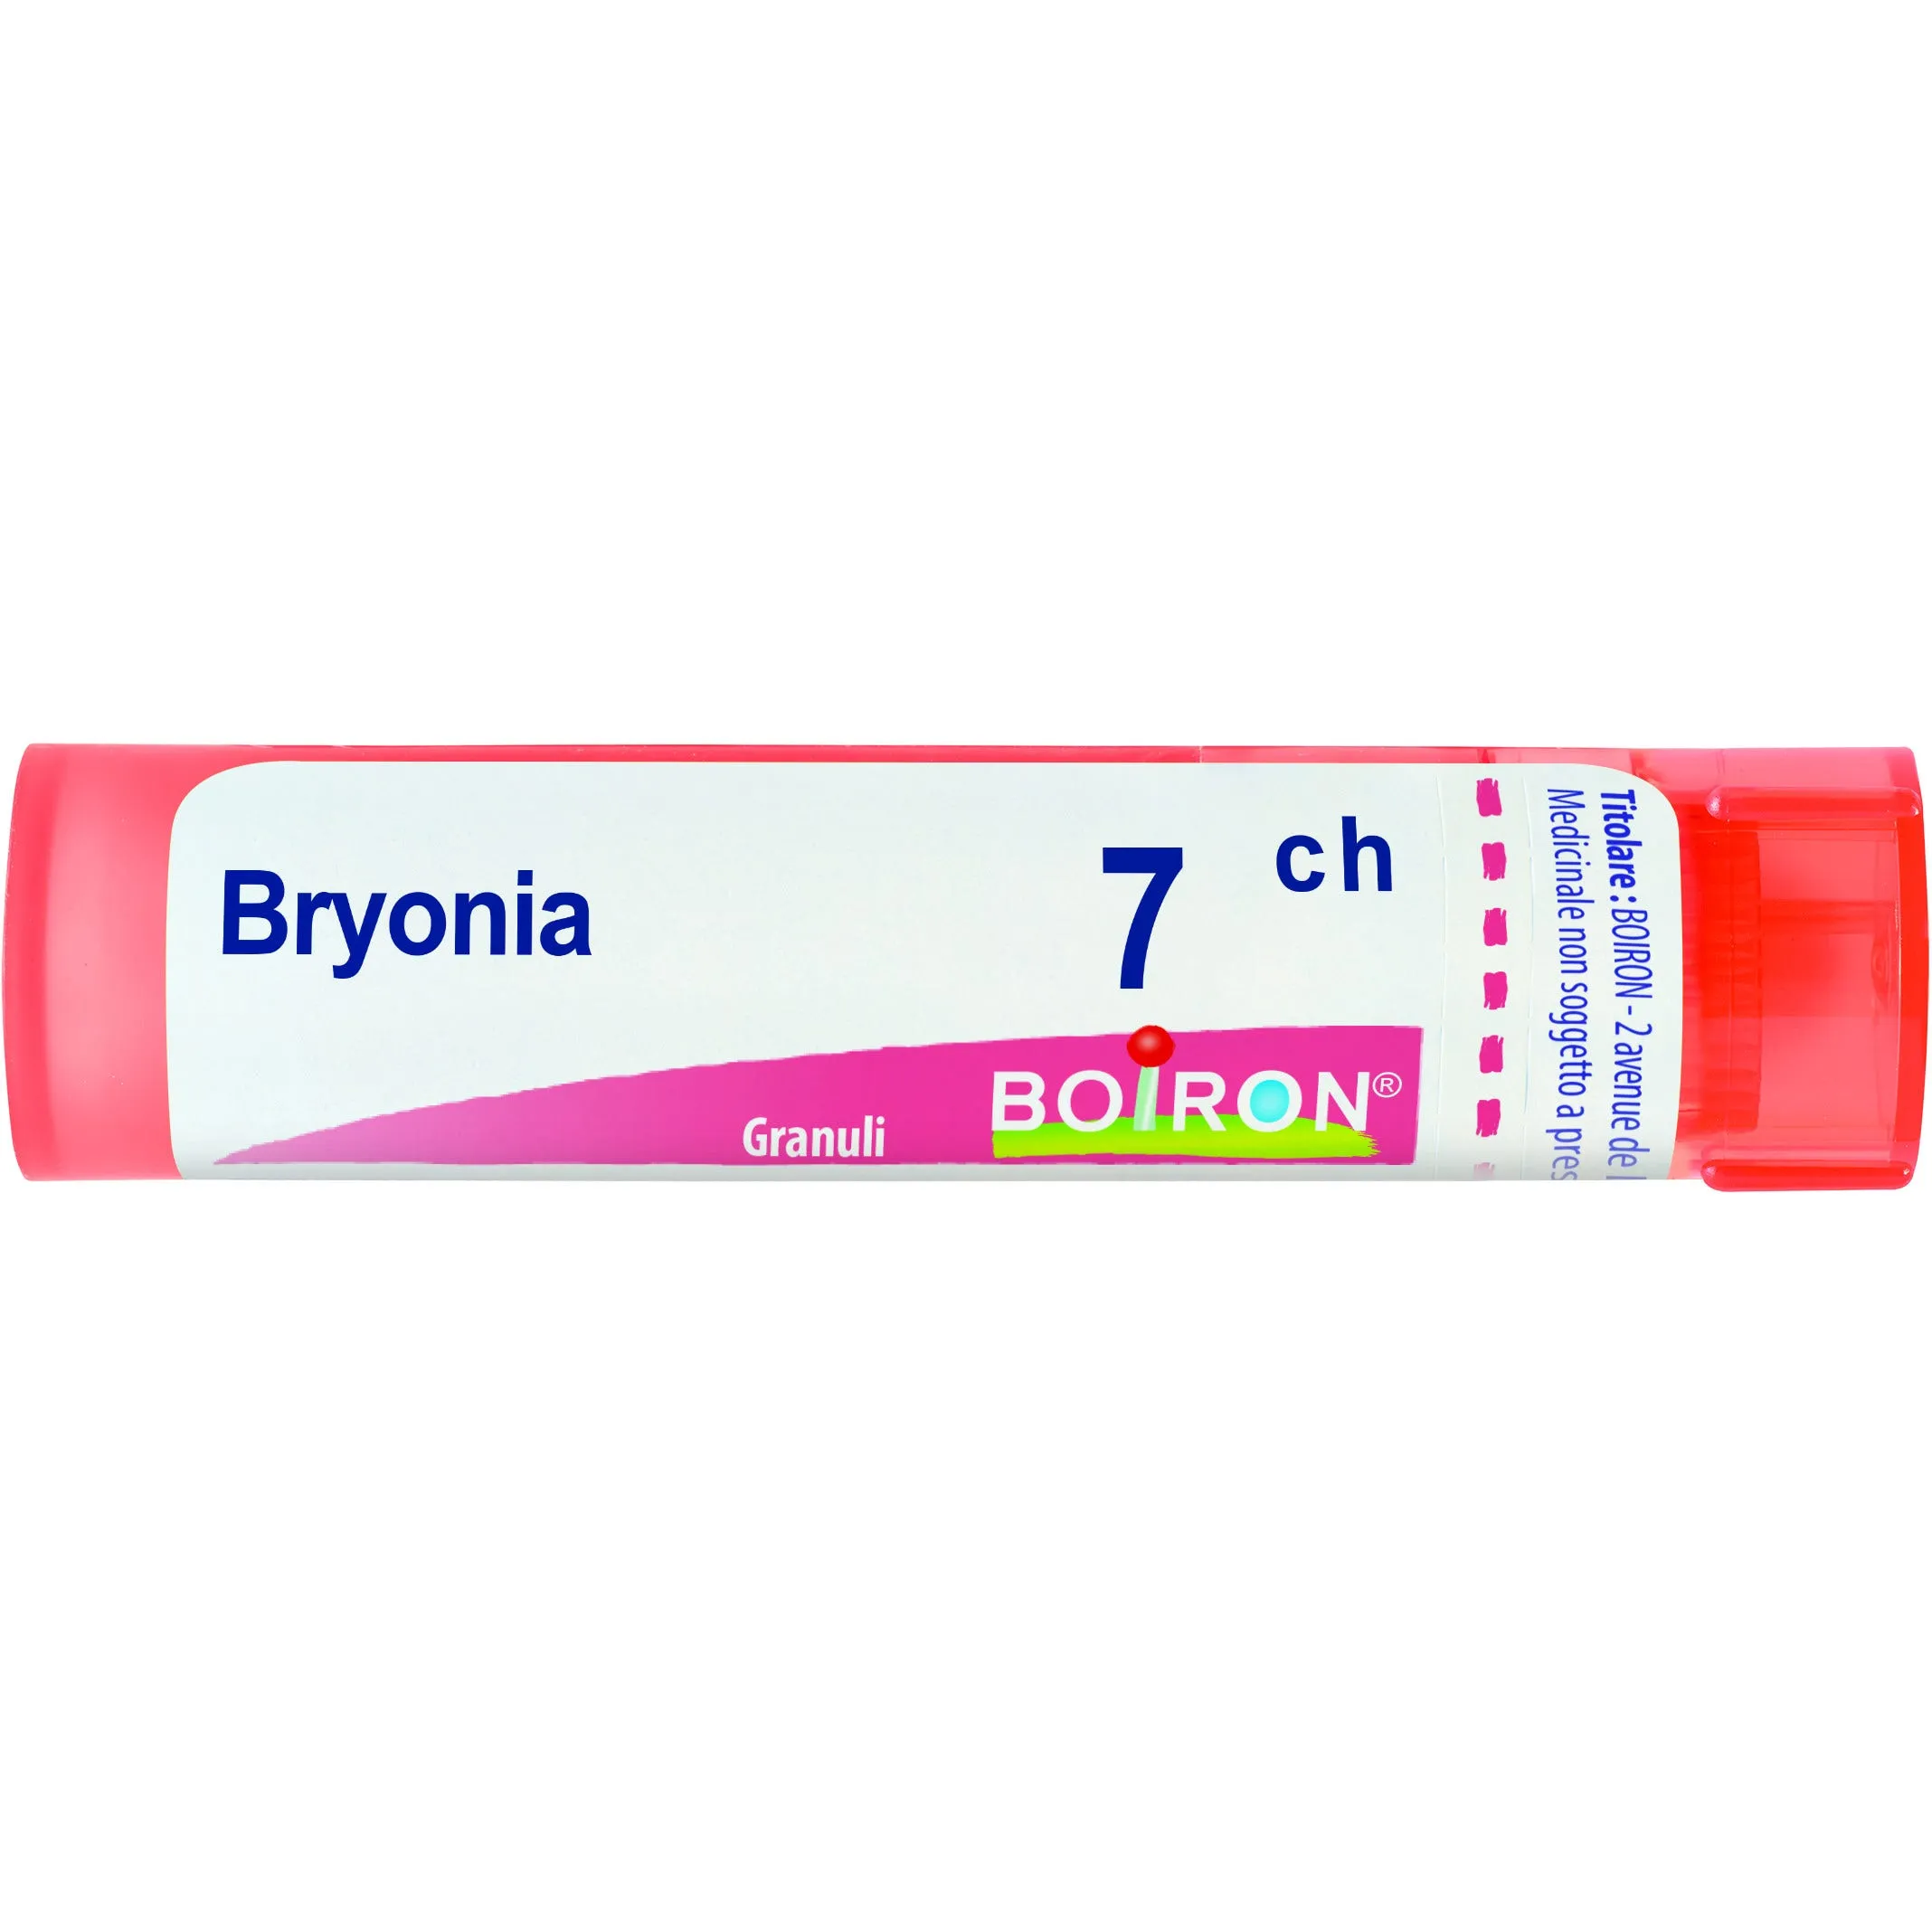 Bryonia Granuli 7 Ch Contenitore Multidose